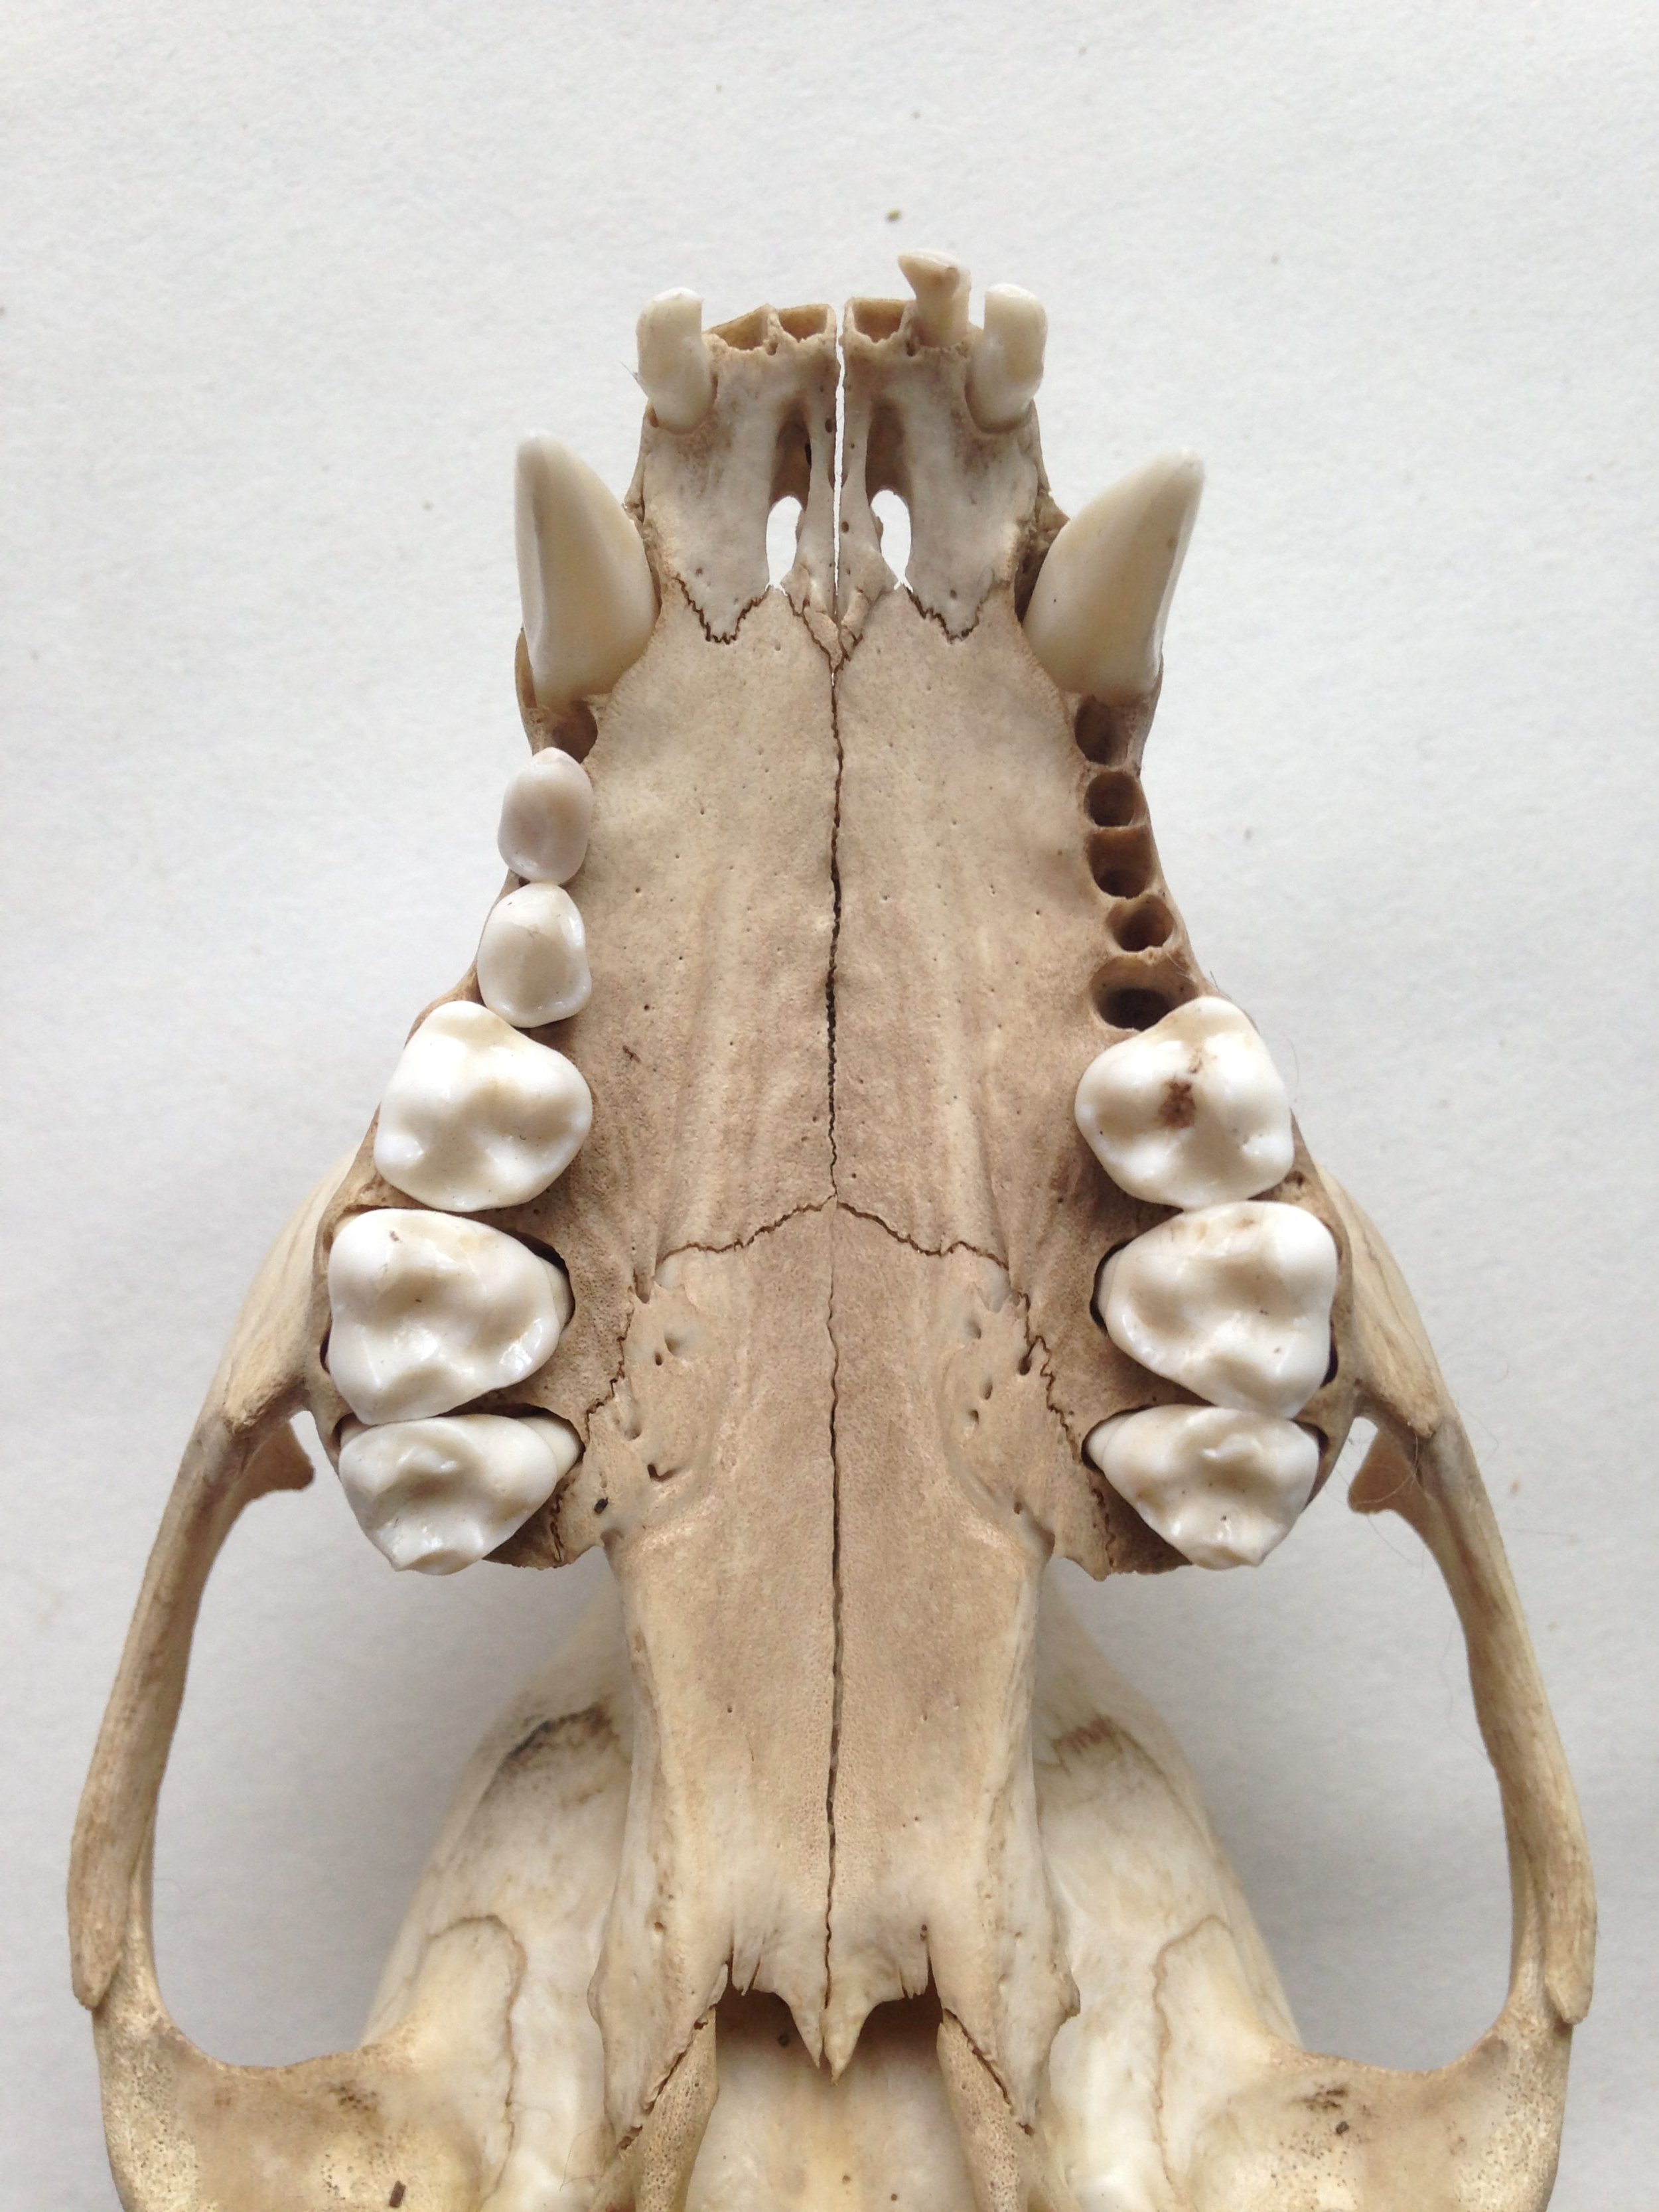 2023.01.03 raccoon skull for dentition study (29)-min.JPG